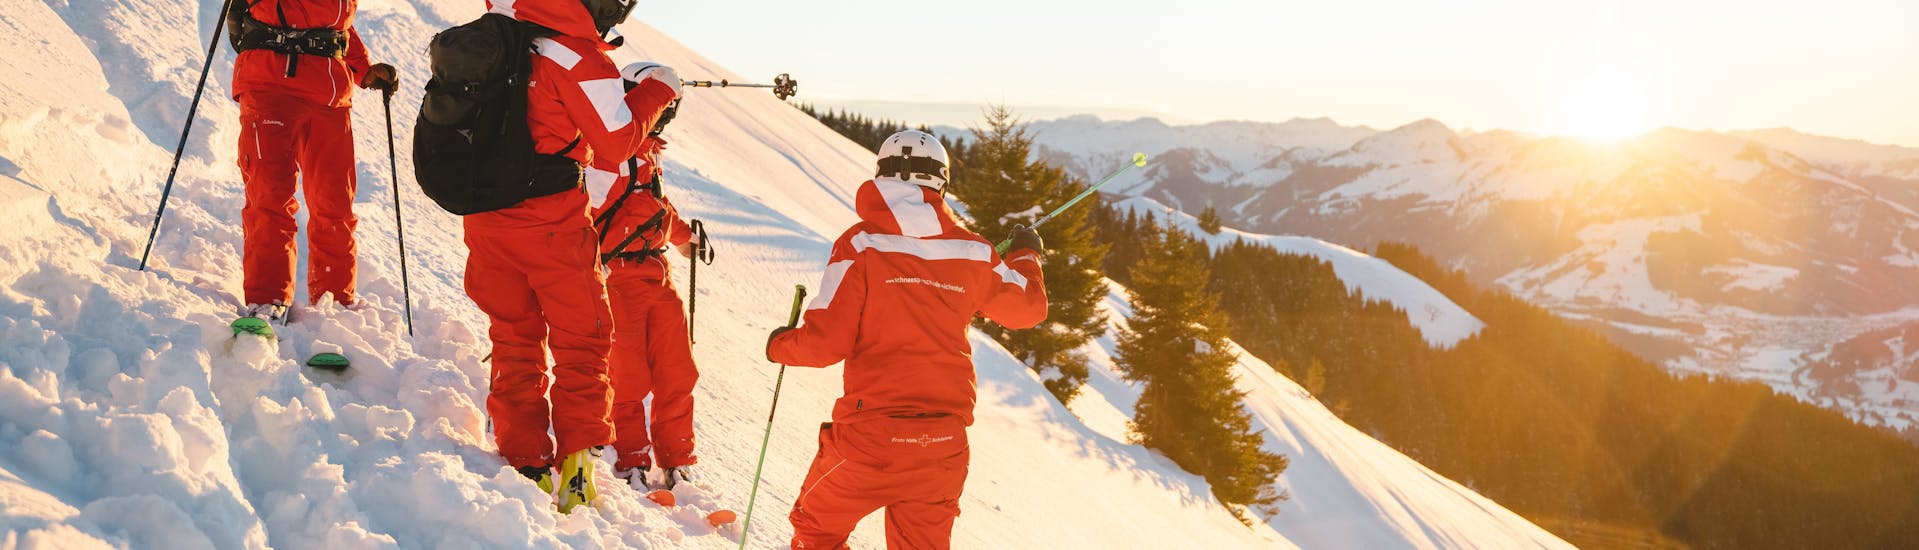 Clases de esquí privadas para adultos con experiencia.